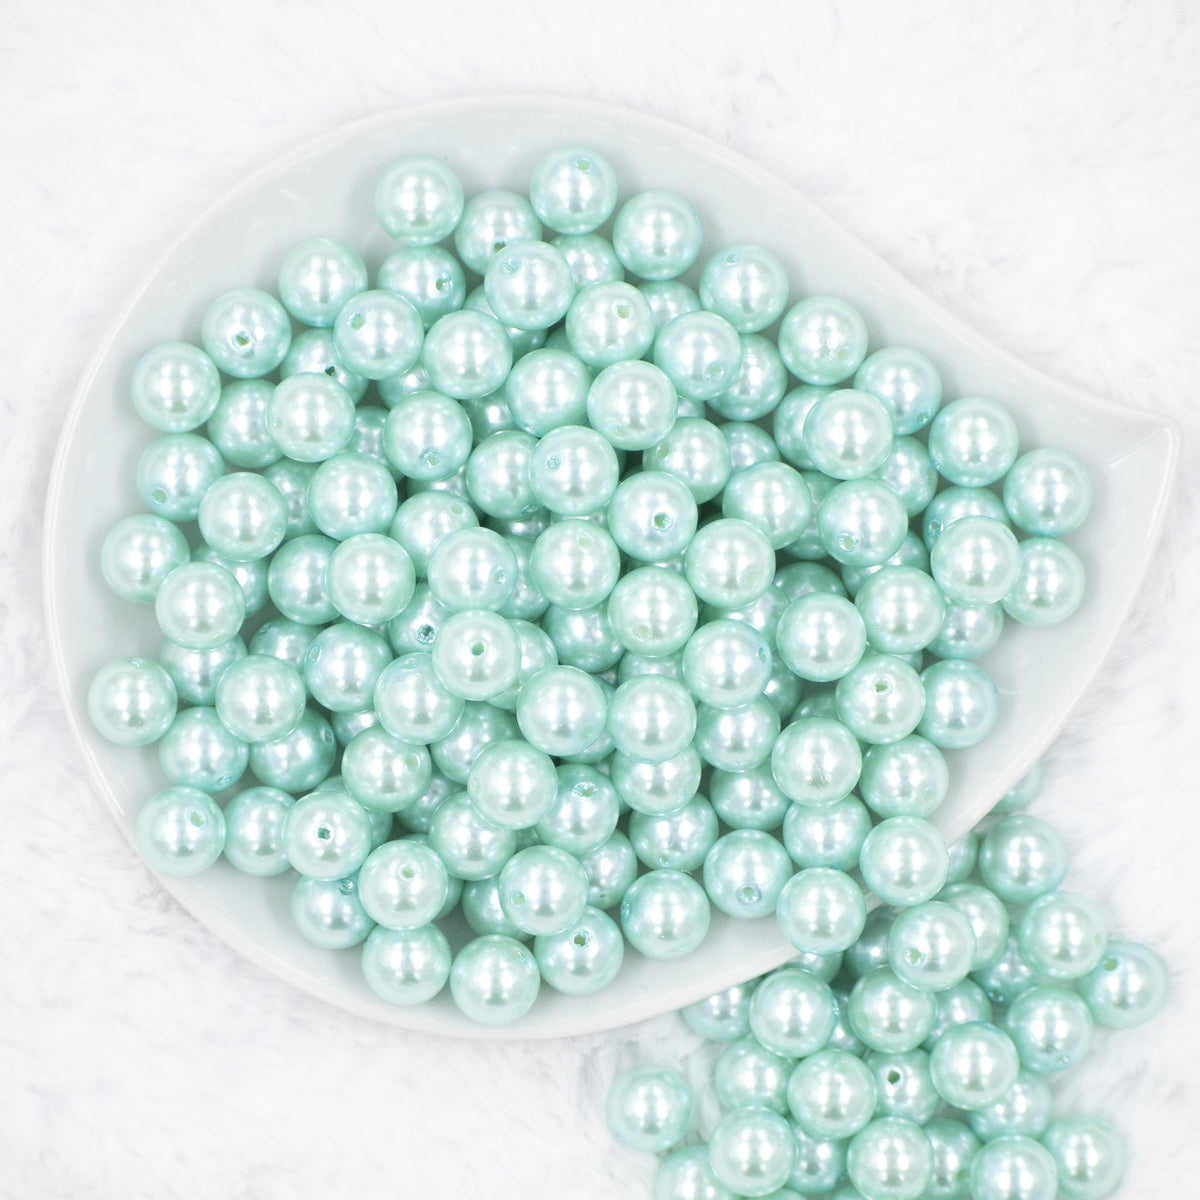 100qty 12mm Mint/Green Mixed Beads - Acrylic Mixed Beads - Bubblegum Beads  - Chunky Beads #1214